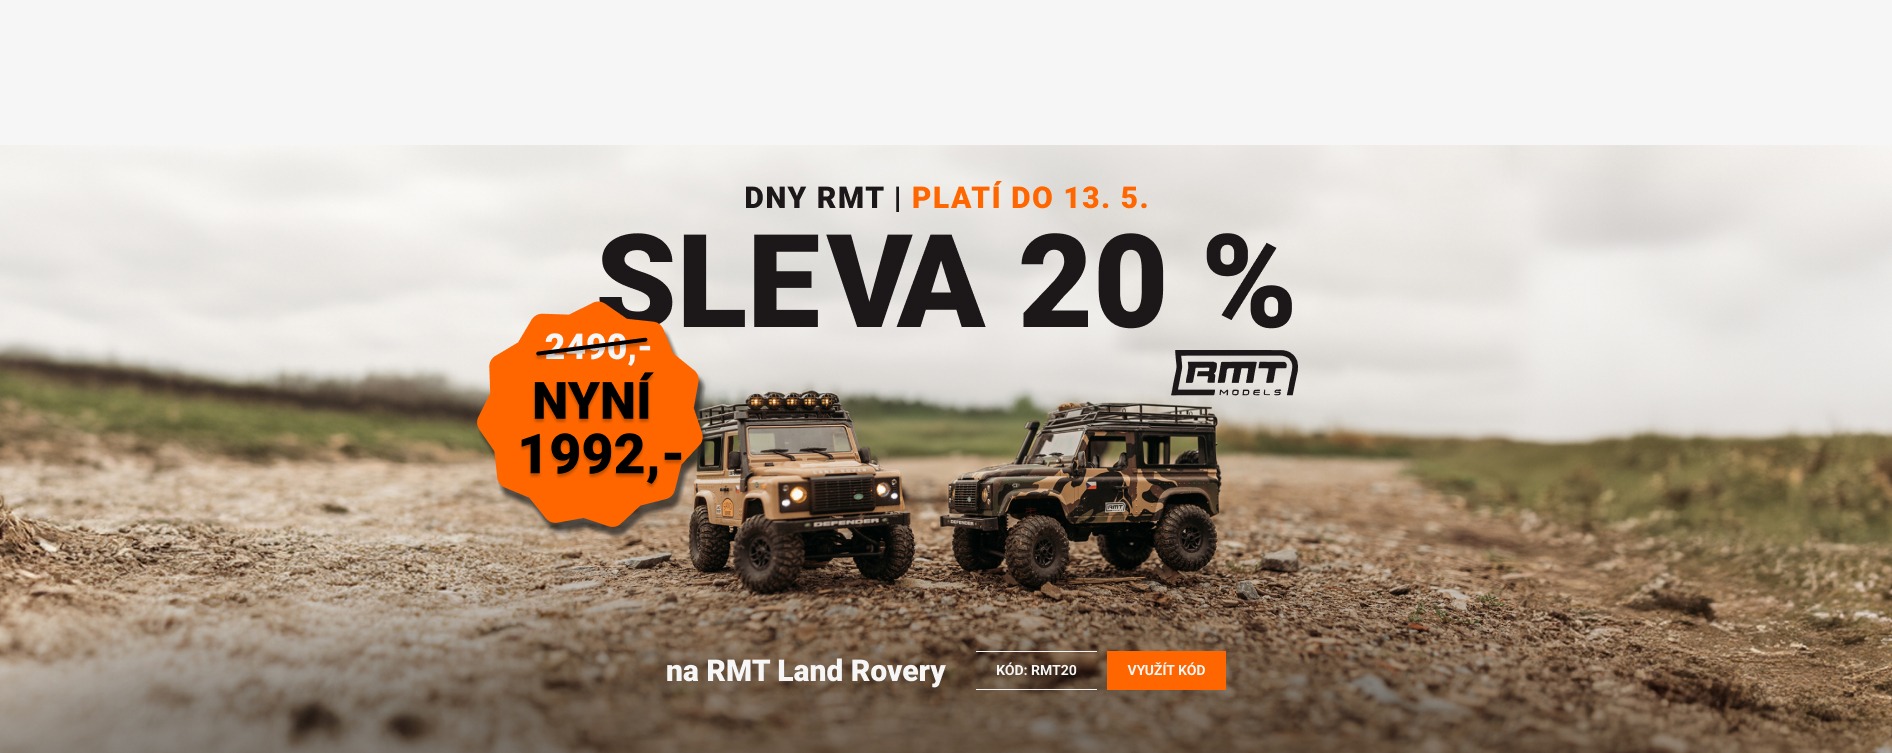 Sleva 20 % na RMT Land Rovery končí 13. 5.